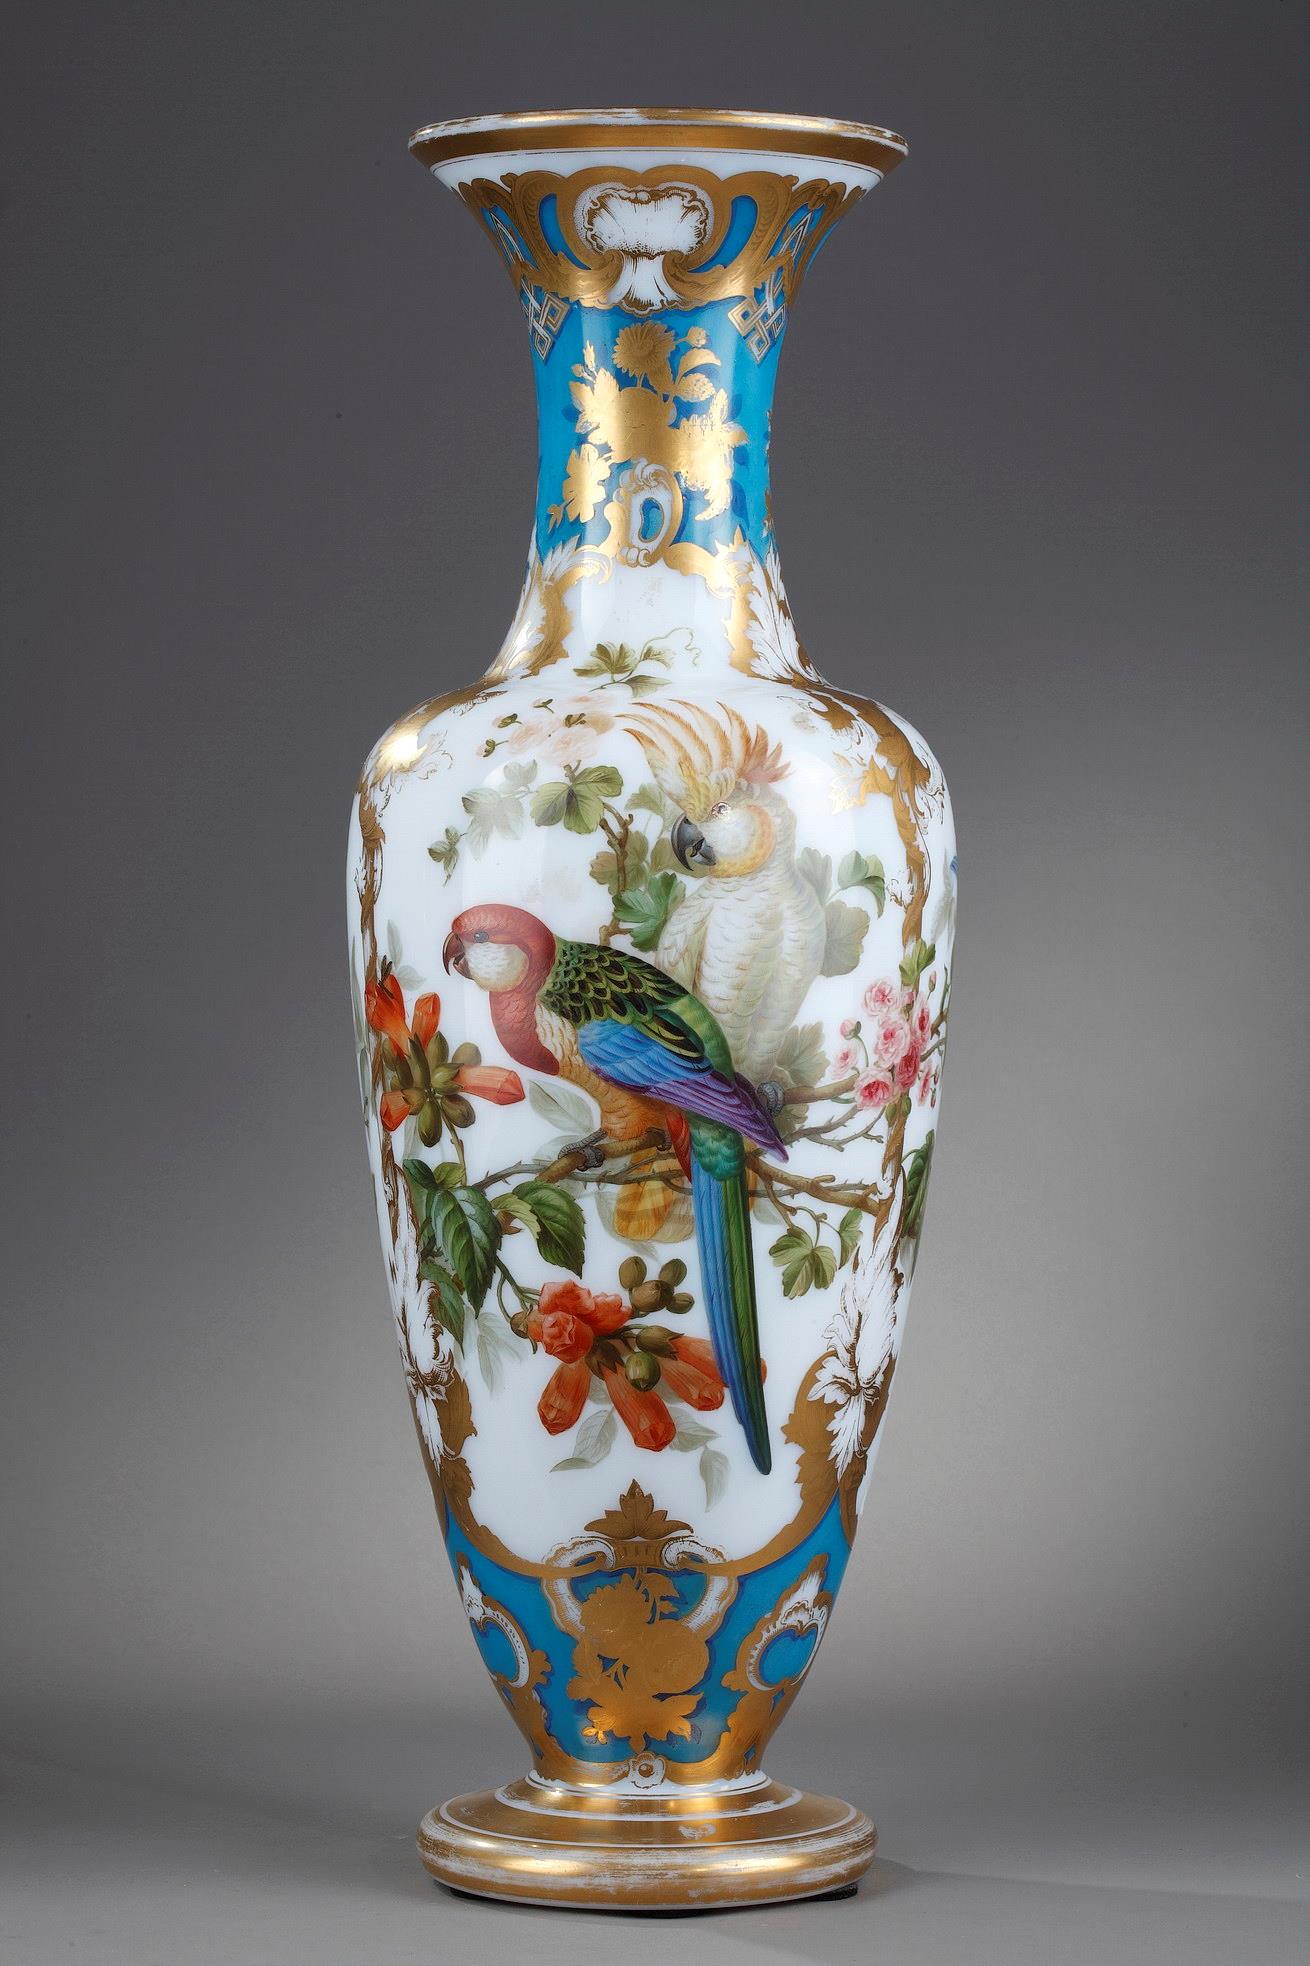 Mid-19th century baluster-vase. Jean-François Robert.